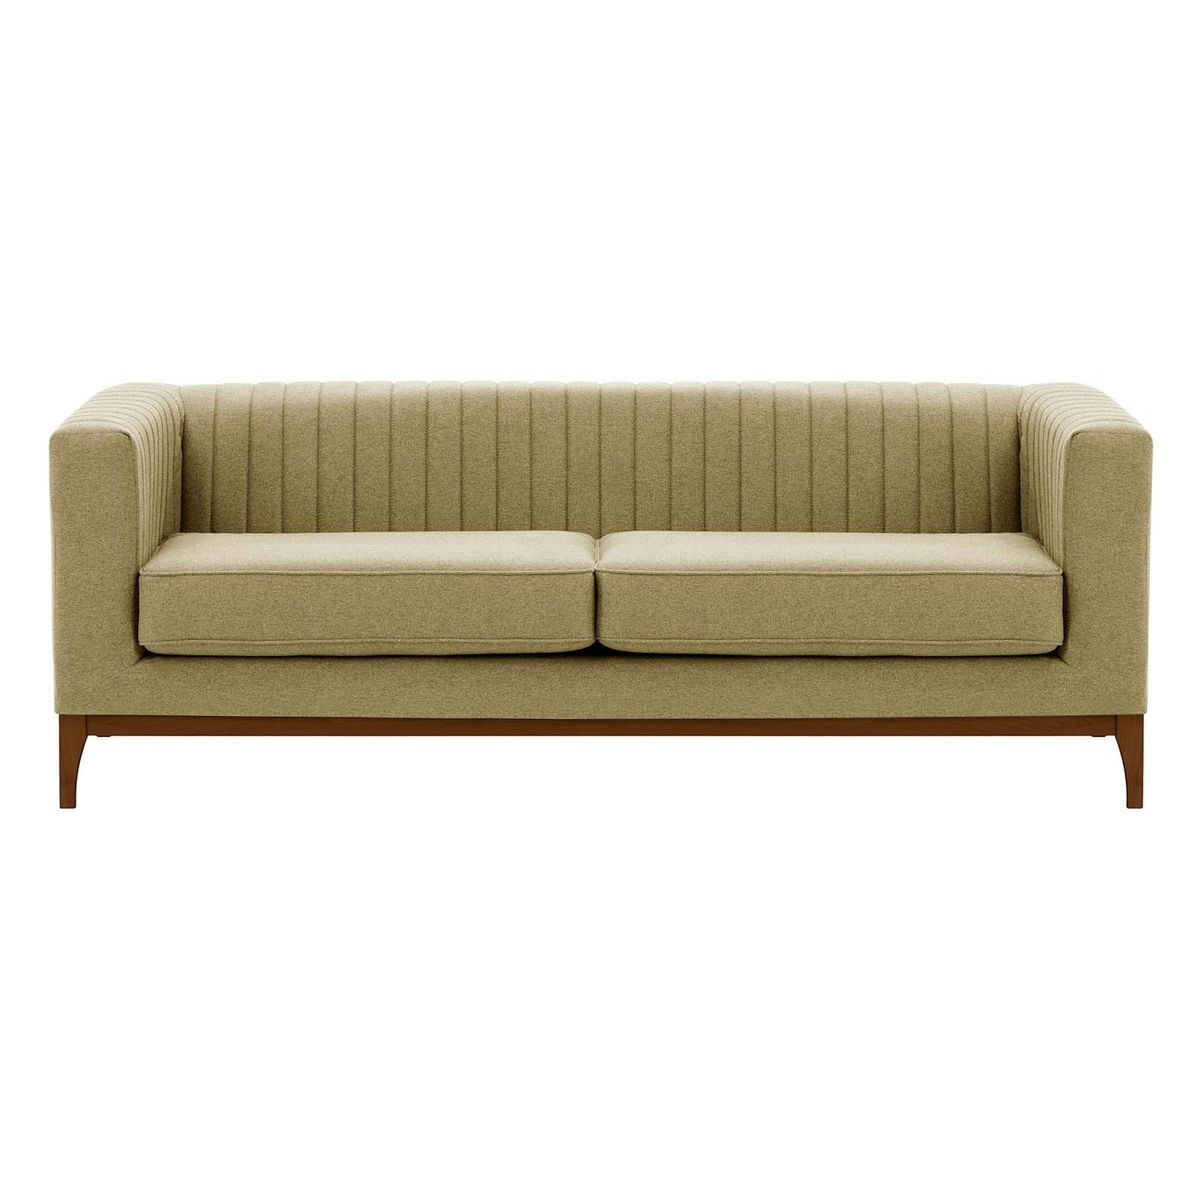 Slender Wood 3 Seater Sofa, beige, Leg colour: dark oak - image 1